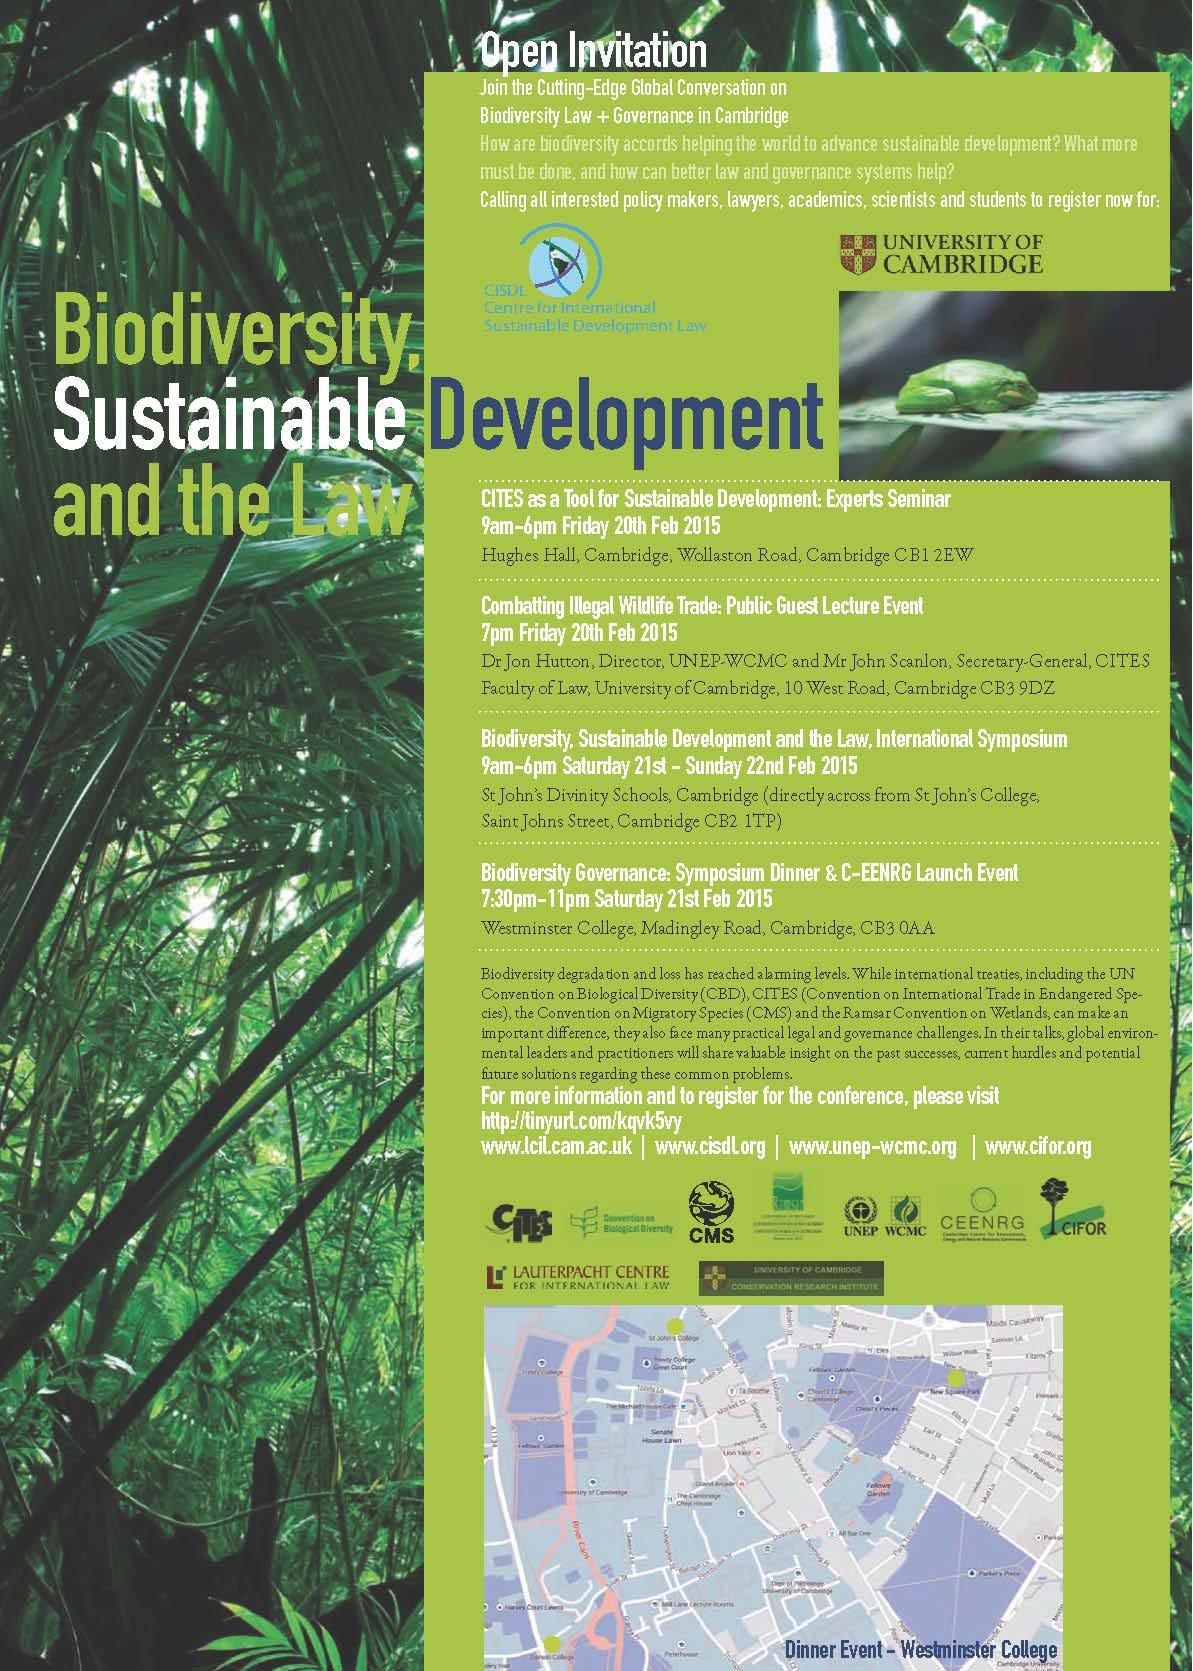 Biodiversity, Sustainable Development and the Law International Symposium 9am-6pm Saturday 21st - Sunday 22nd Feb 2015 St John’s Divinity Schools, Cambridge